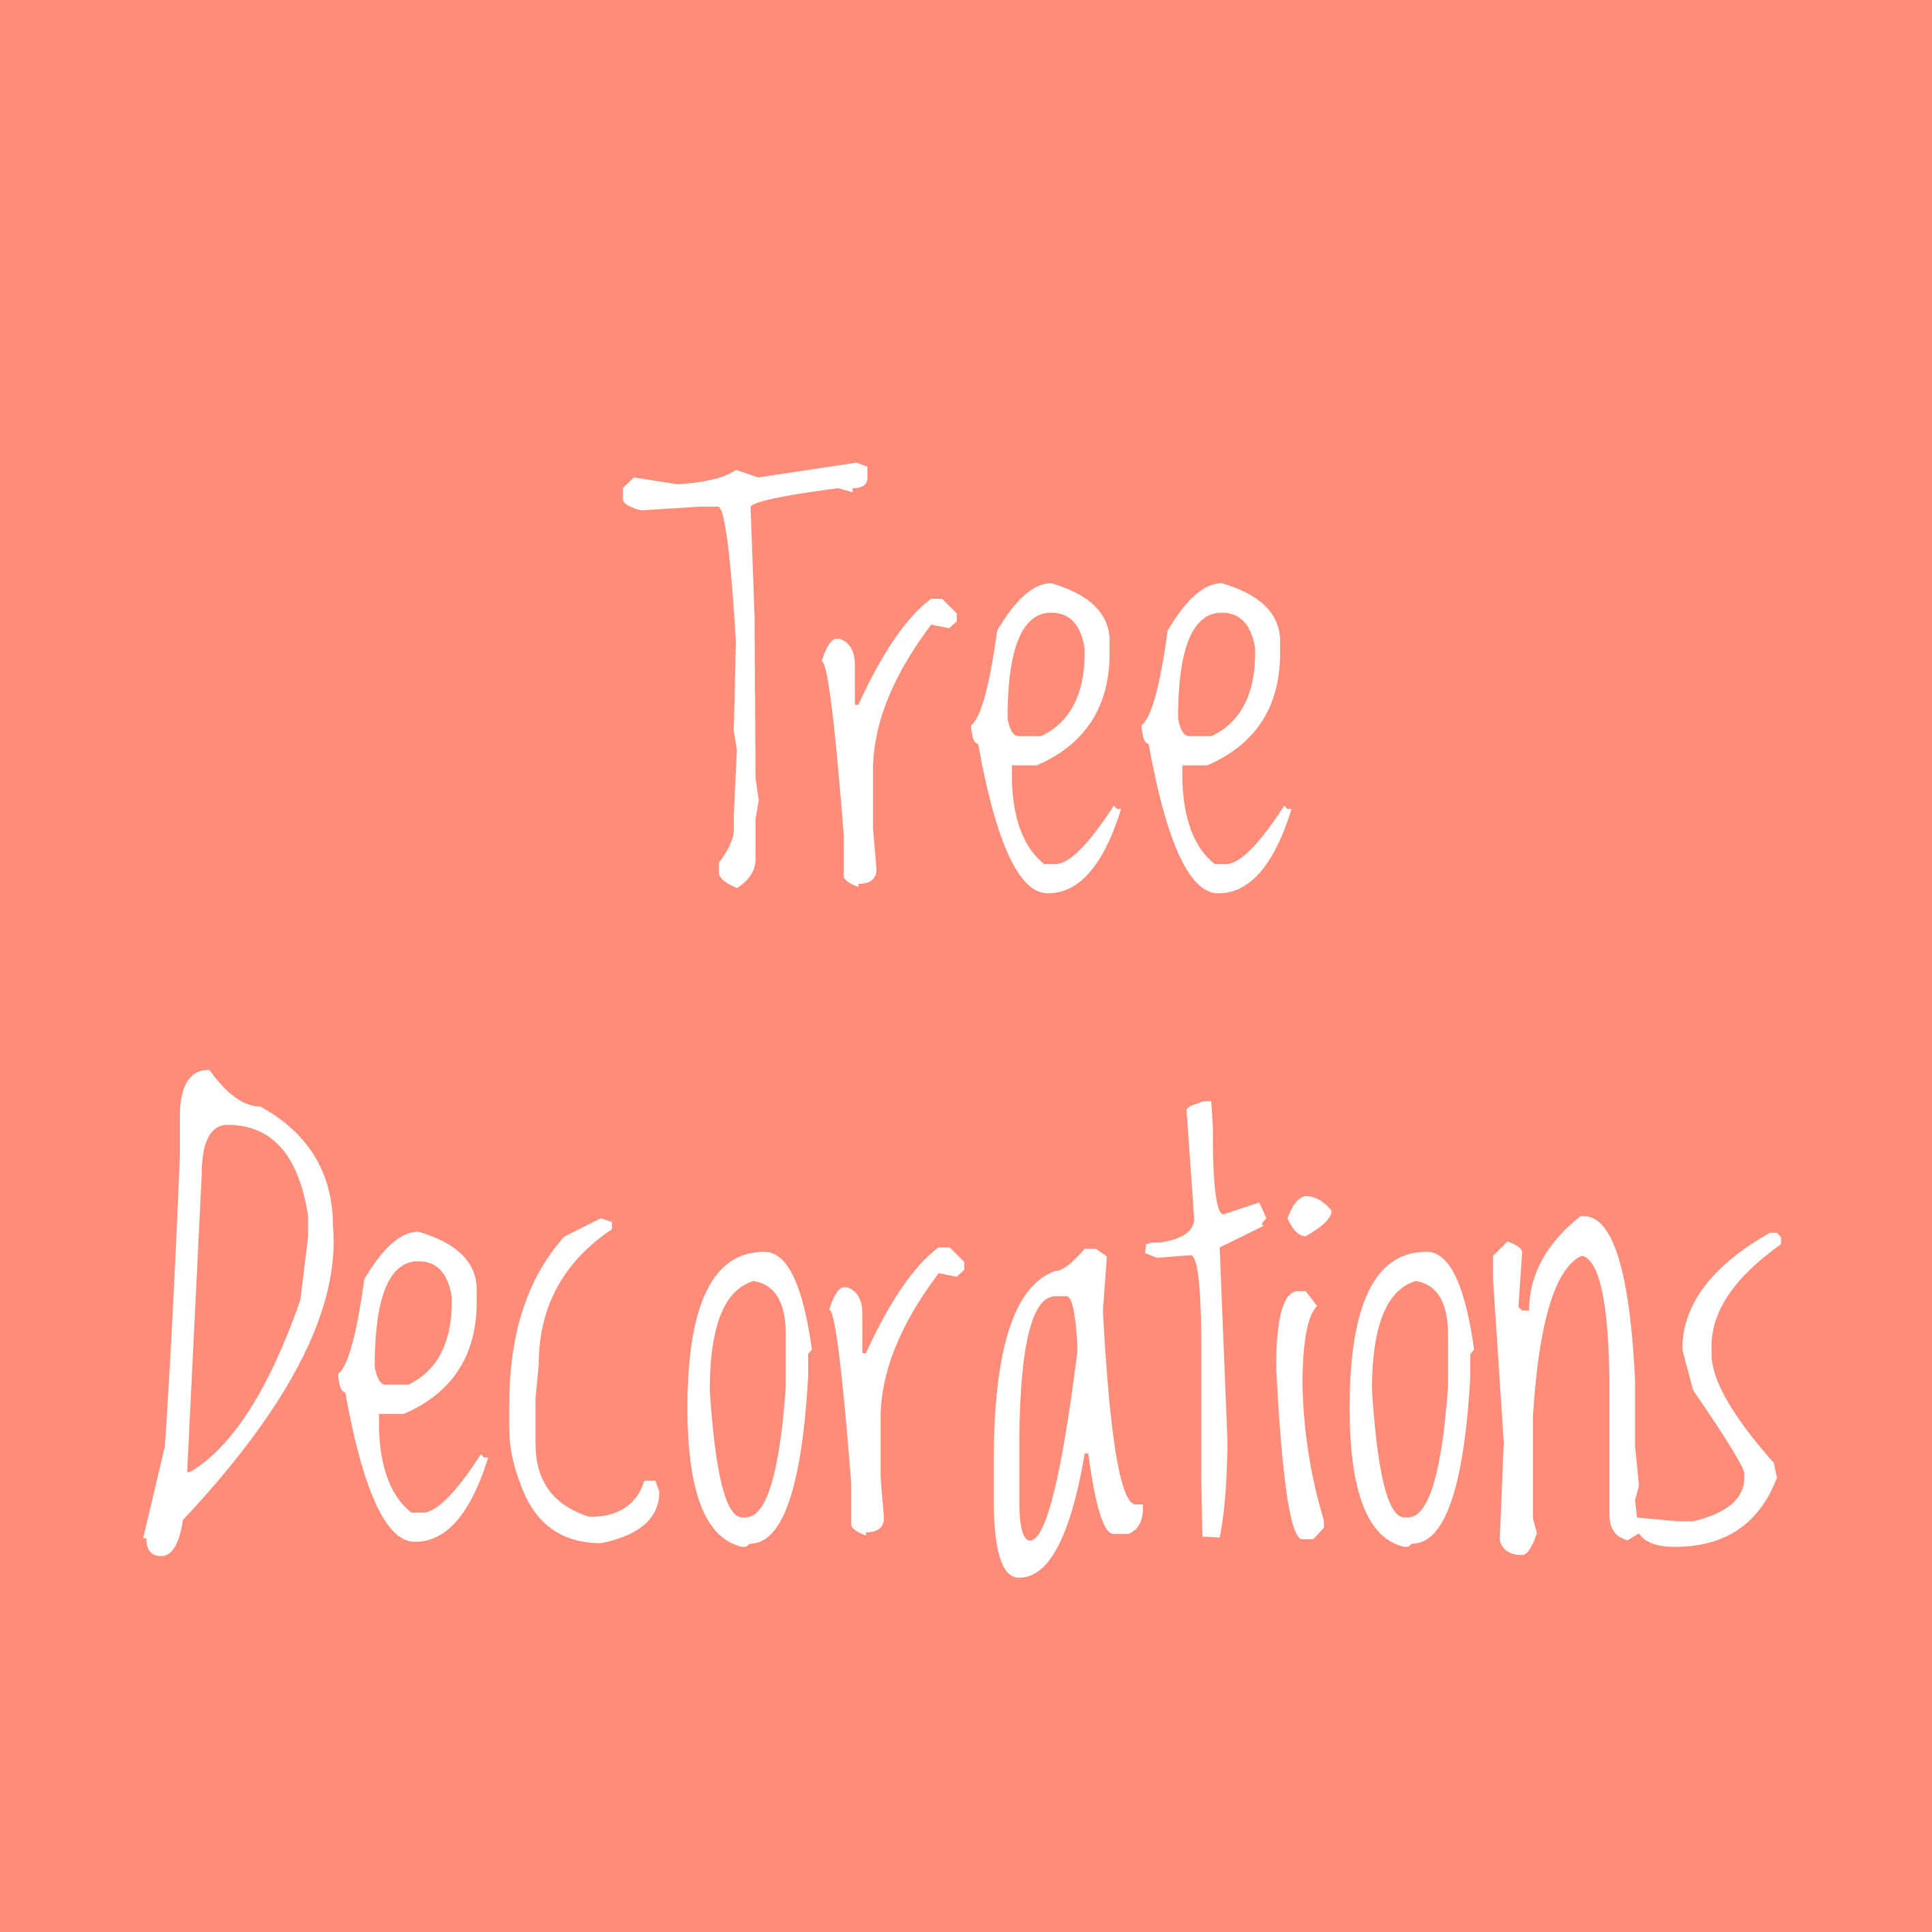 Tree Decorations